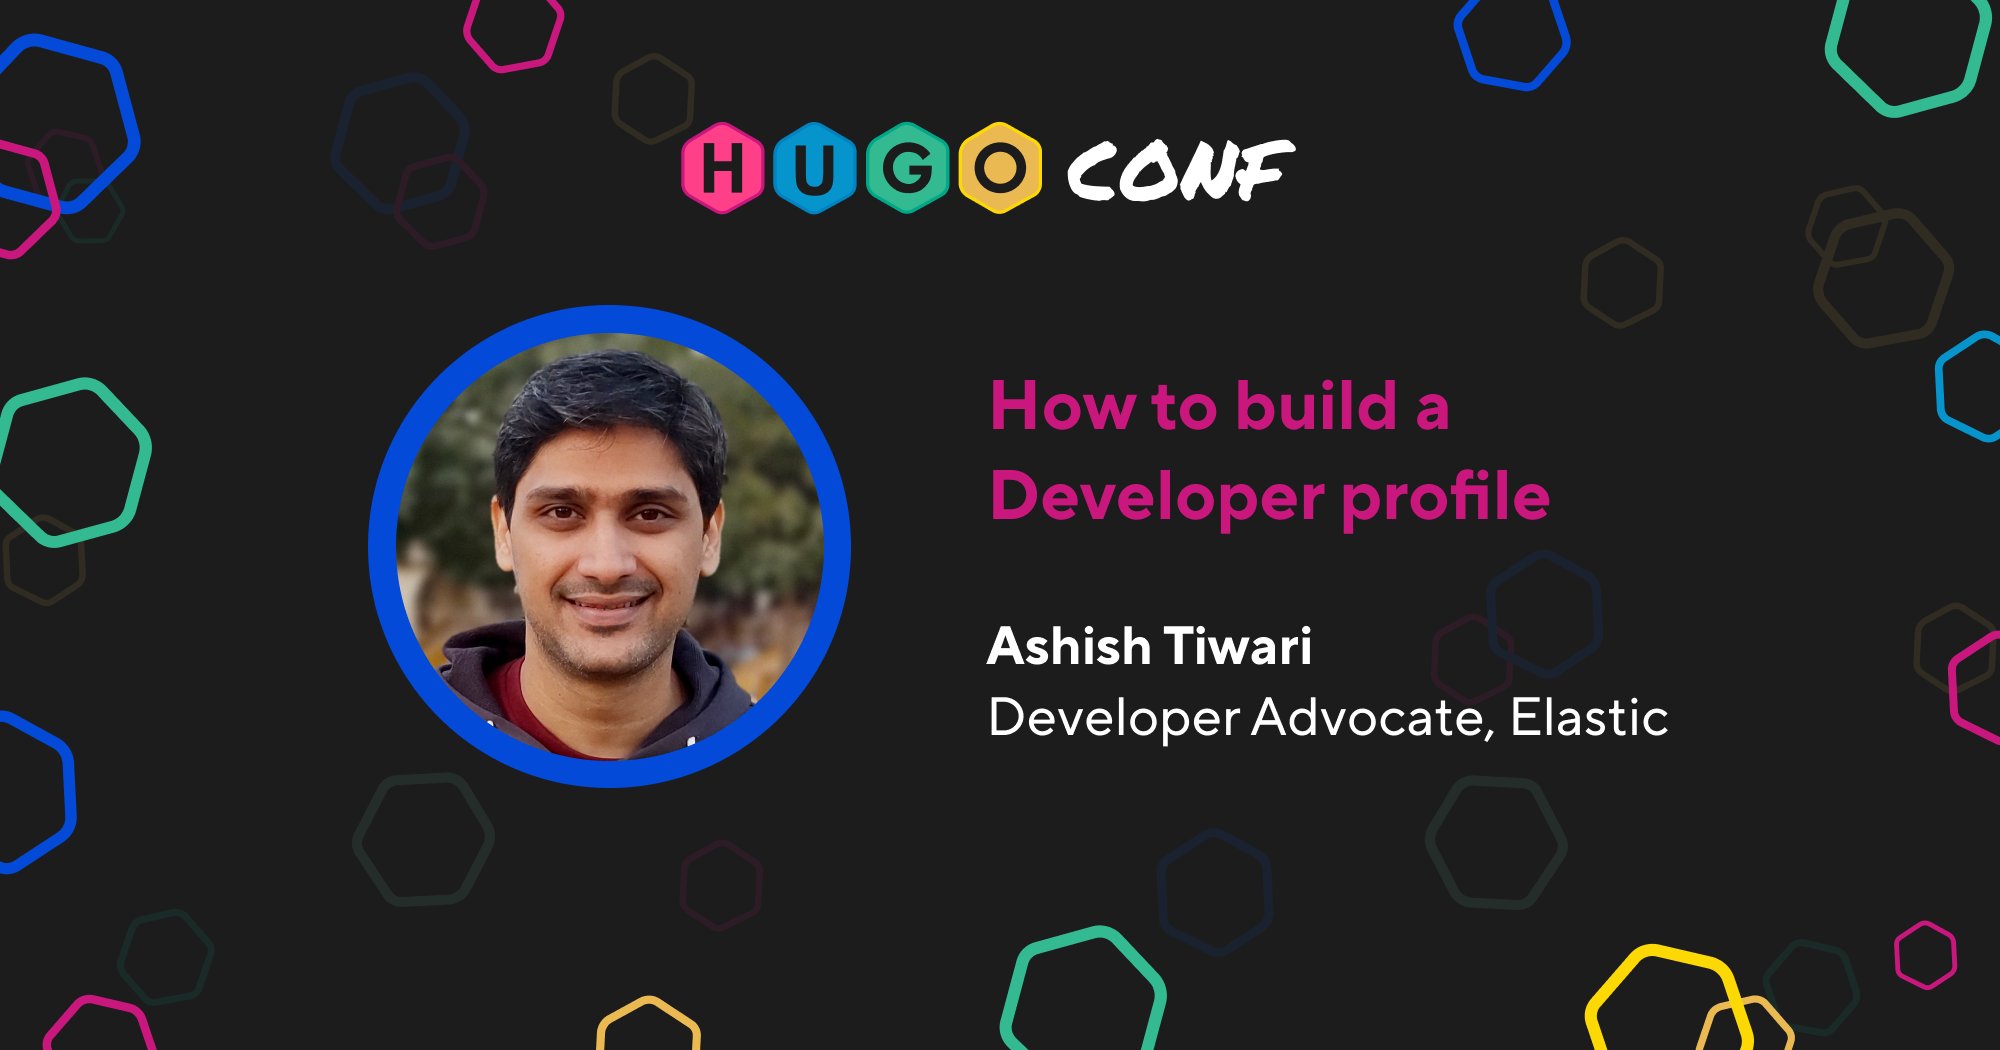 Hugoconf2022 how to build a developer profile